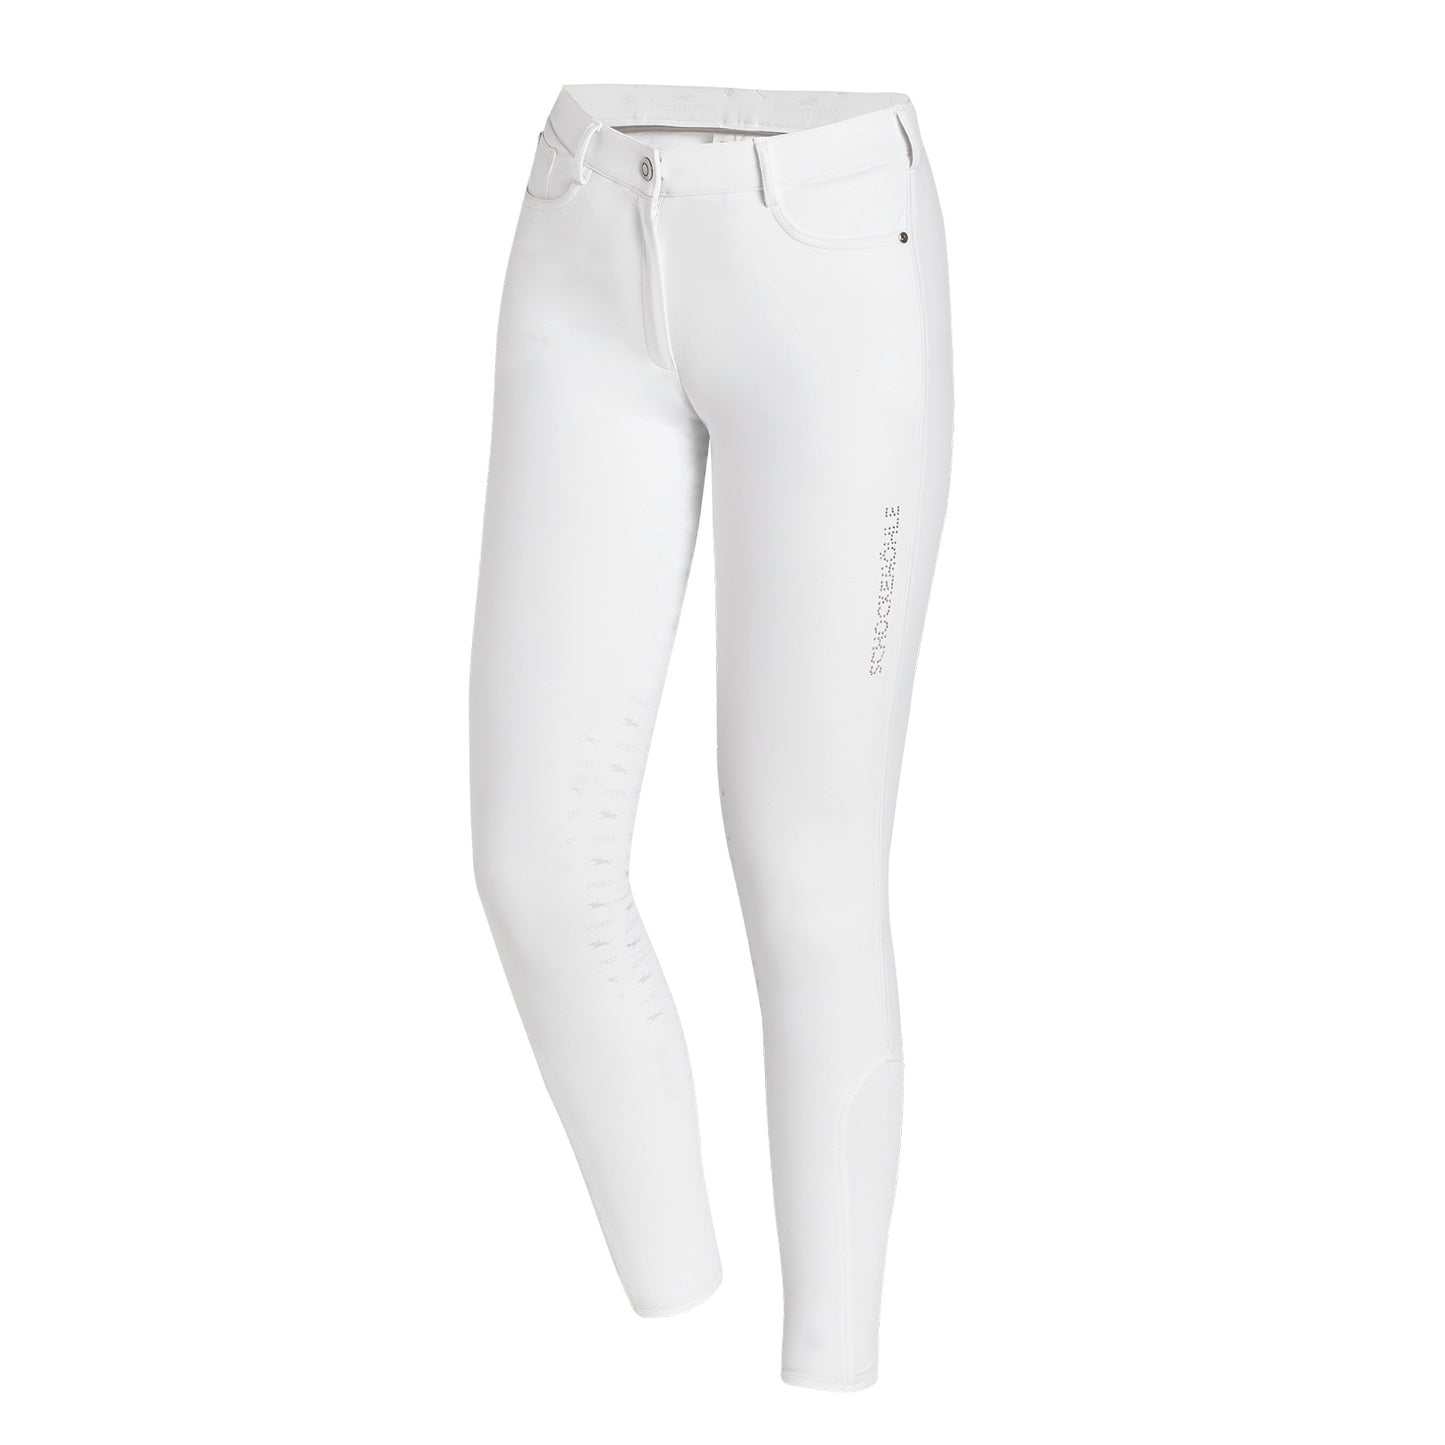 Pantalon Livia, blanc, genoux grip - Schockemöhle Sports